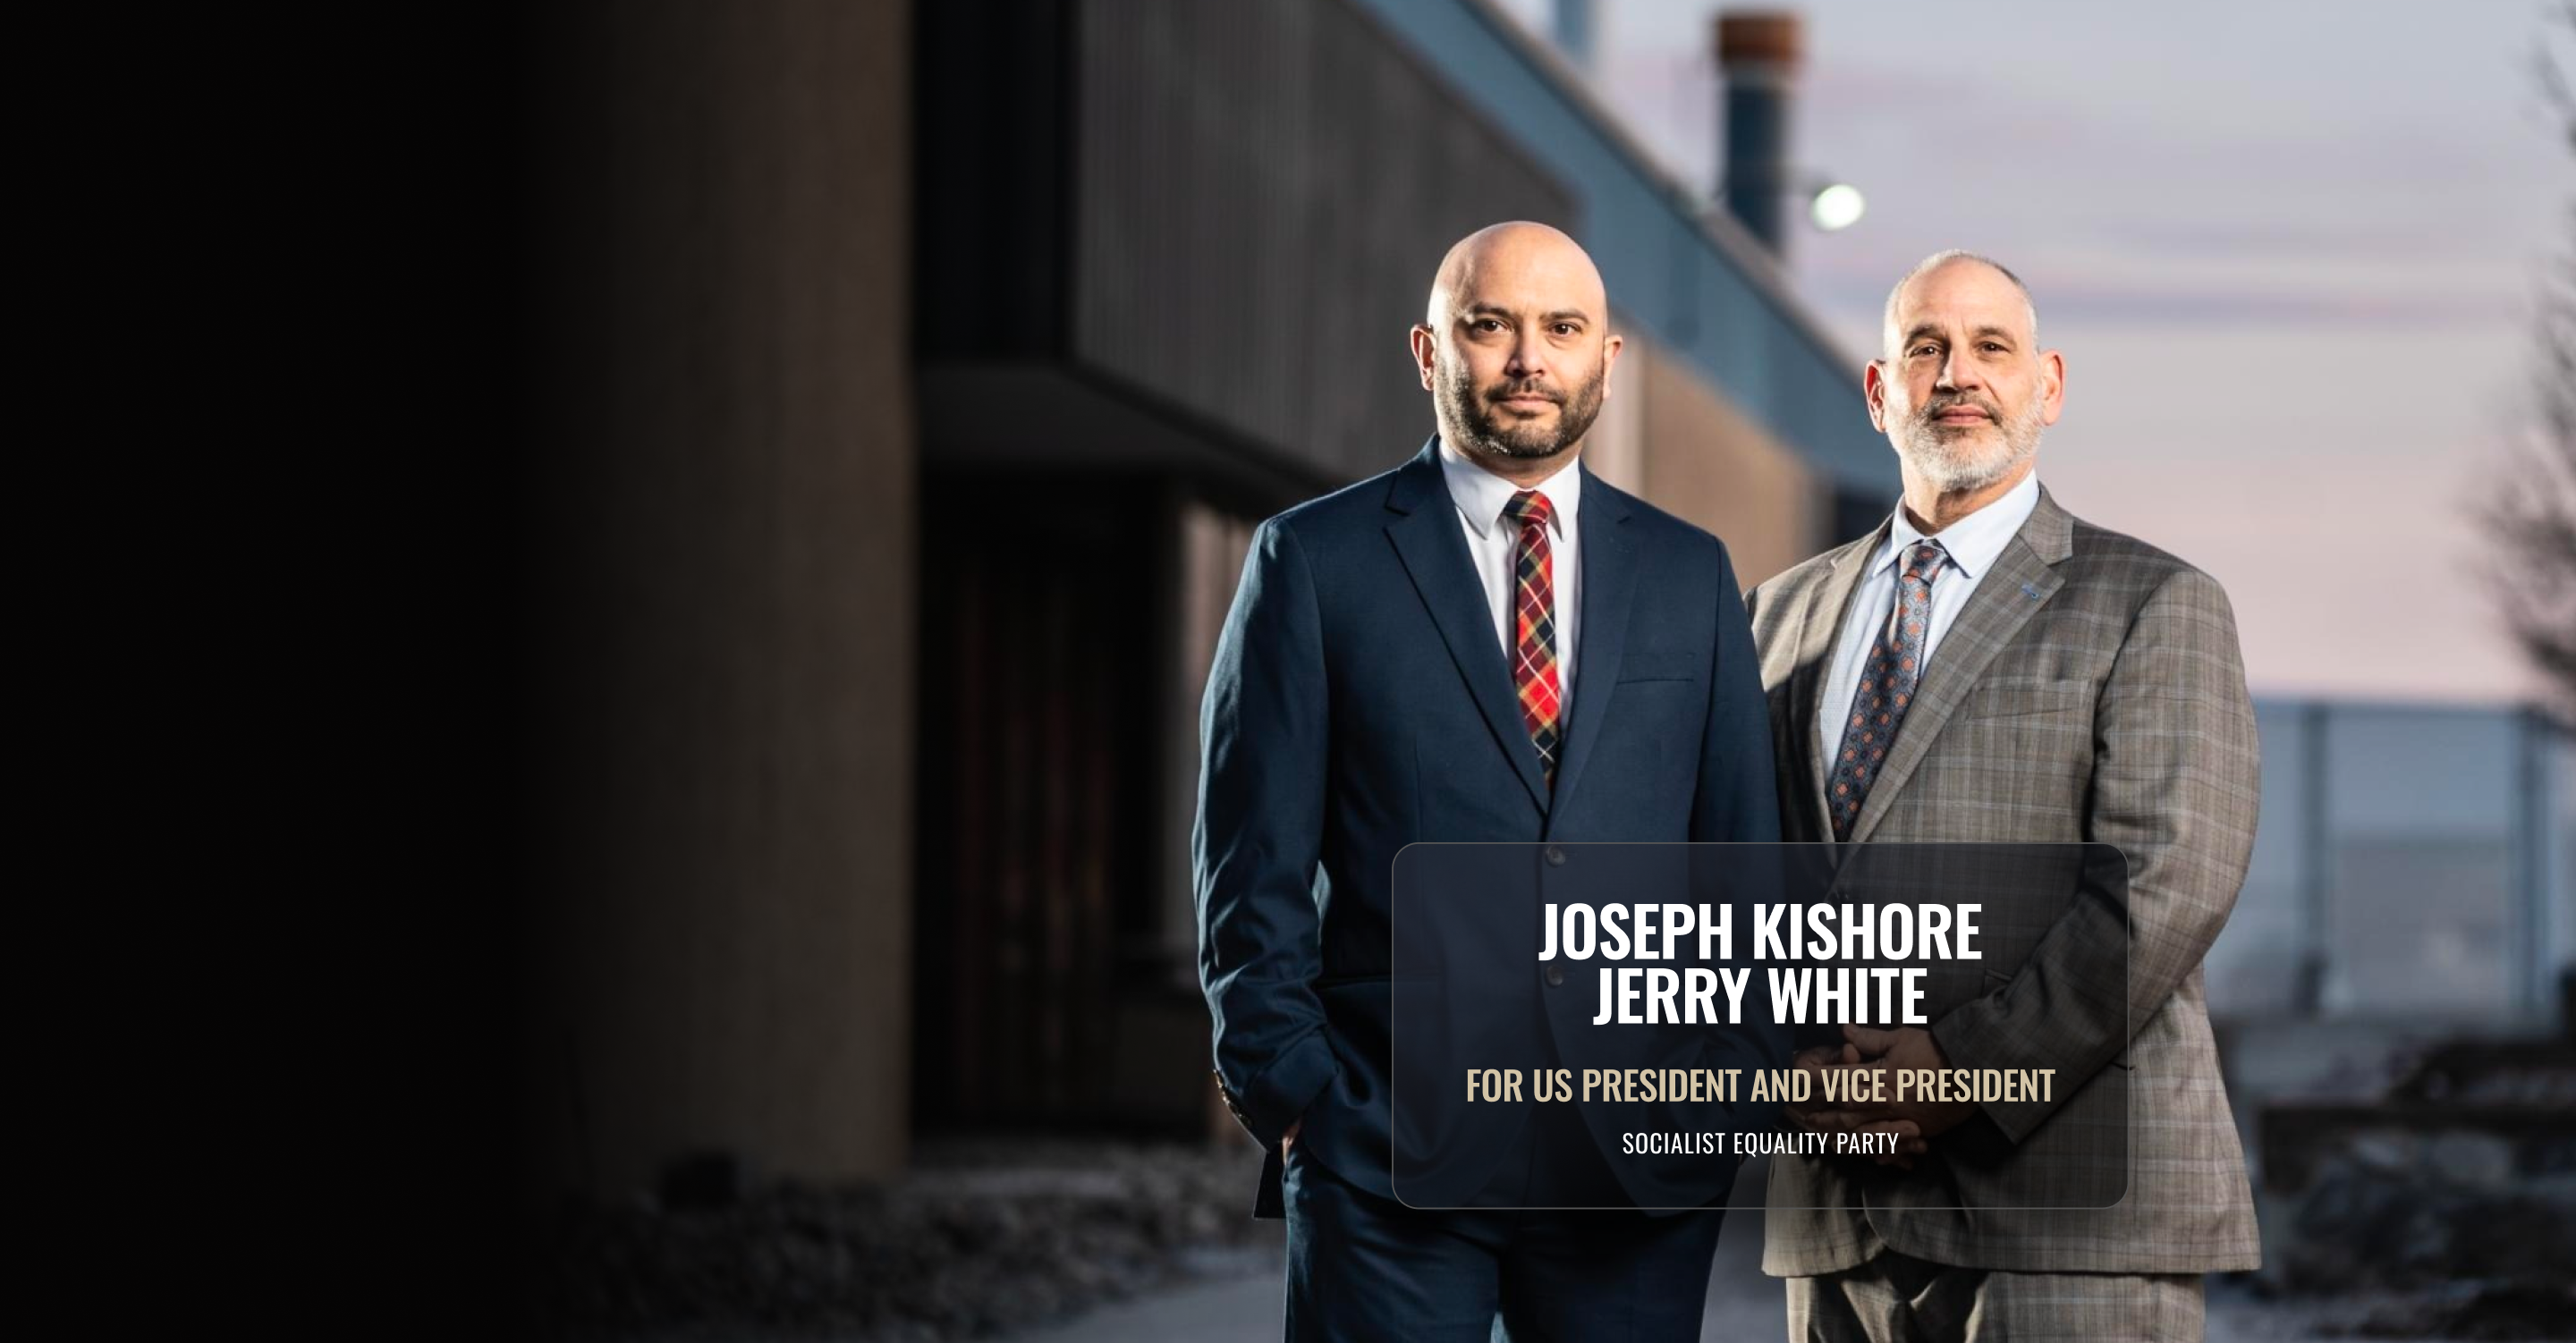 Joseph Kishore and Jerry White